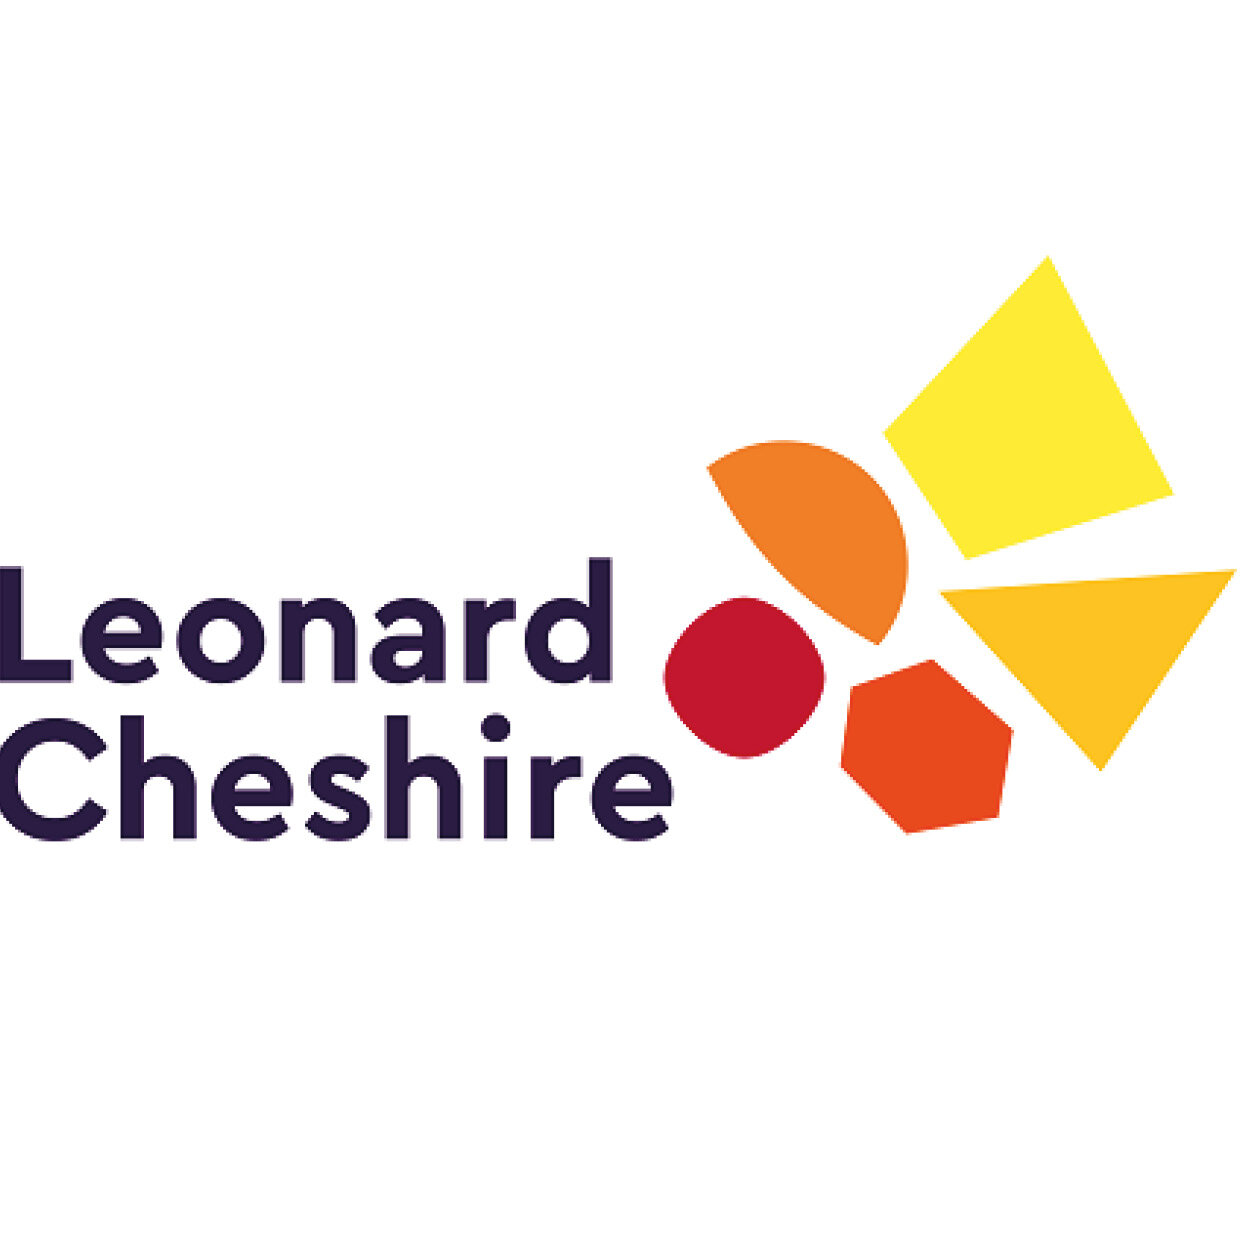 Leonard Cheshire Logo Square.jpg